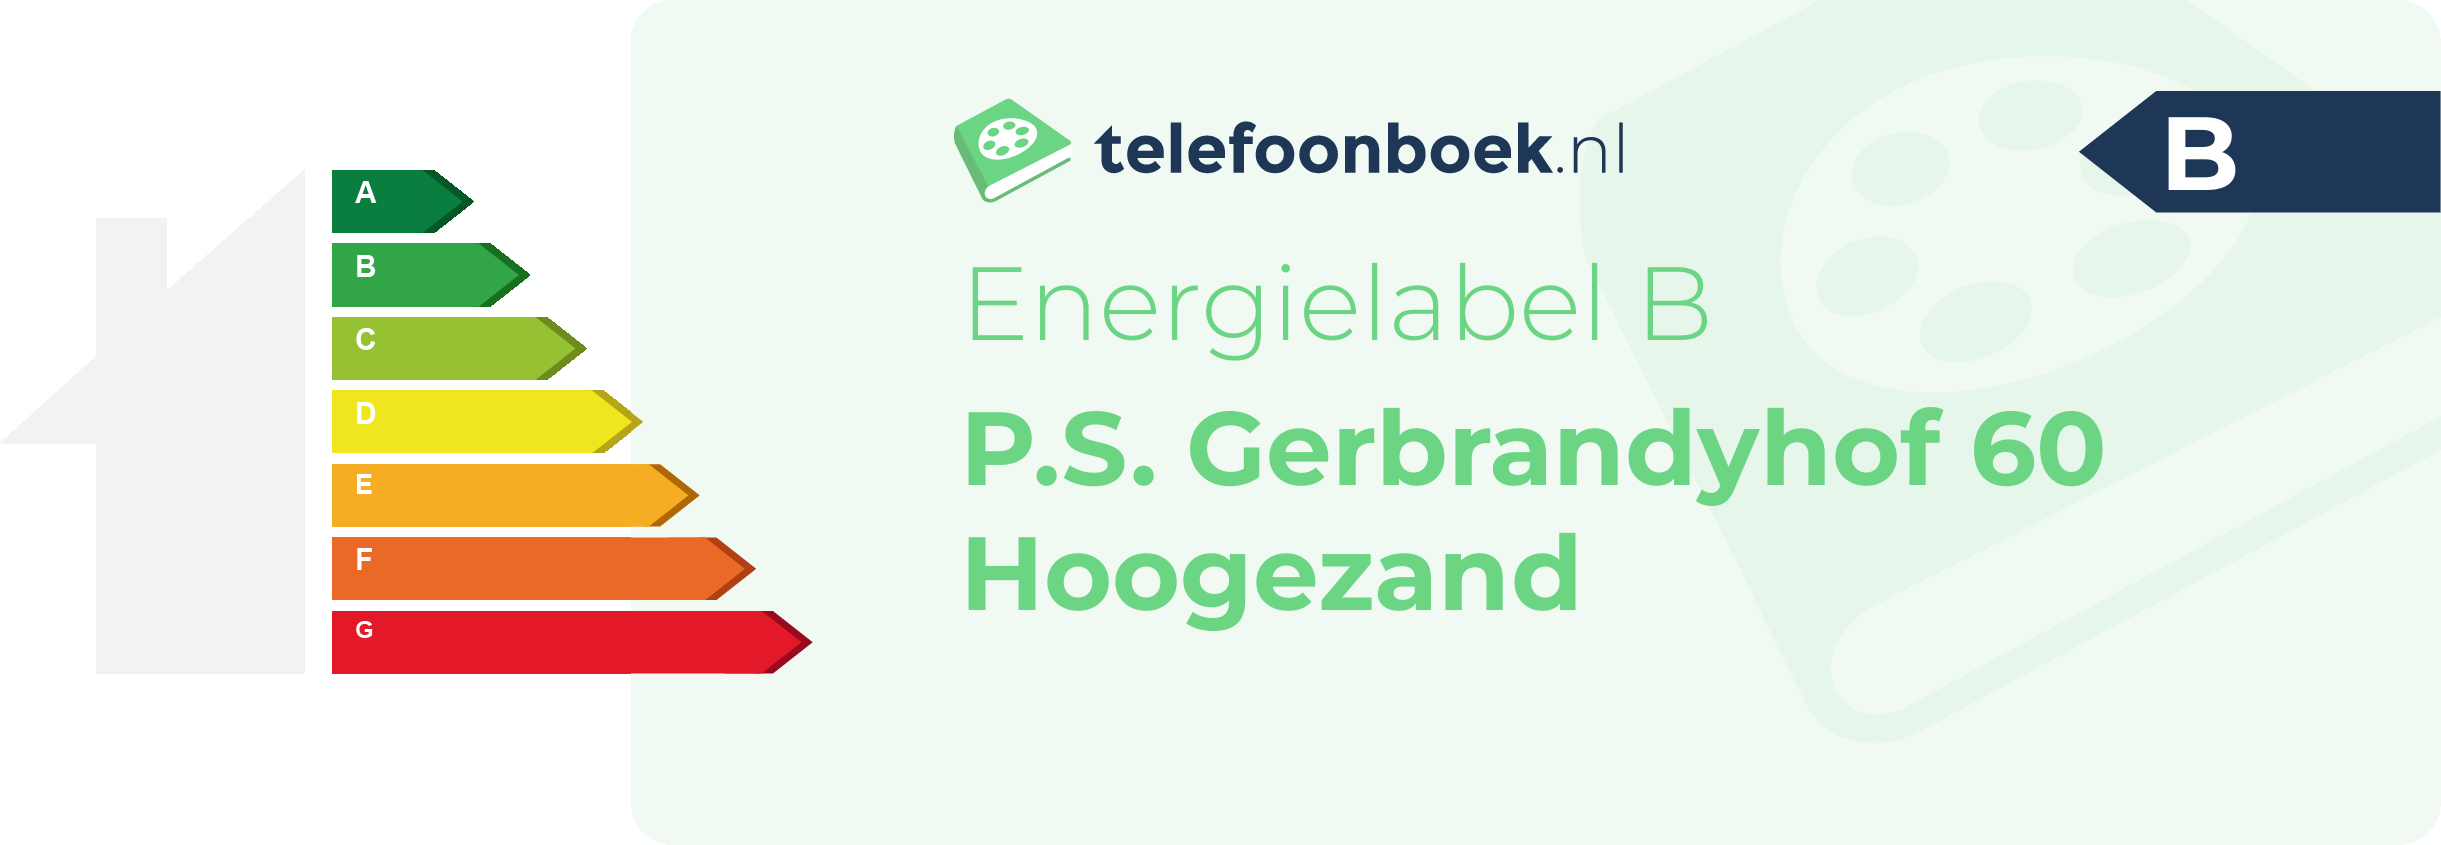 Energielabel P.S. Gerbrandyhof 60 Hoogezand